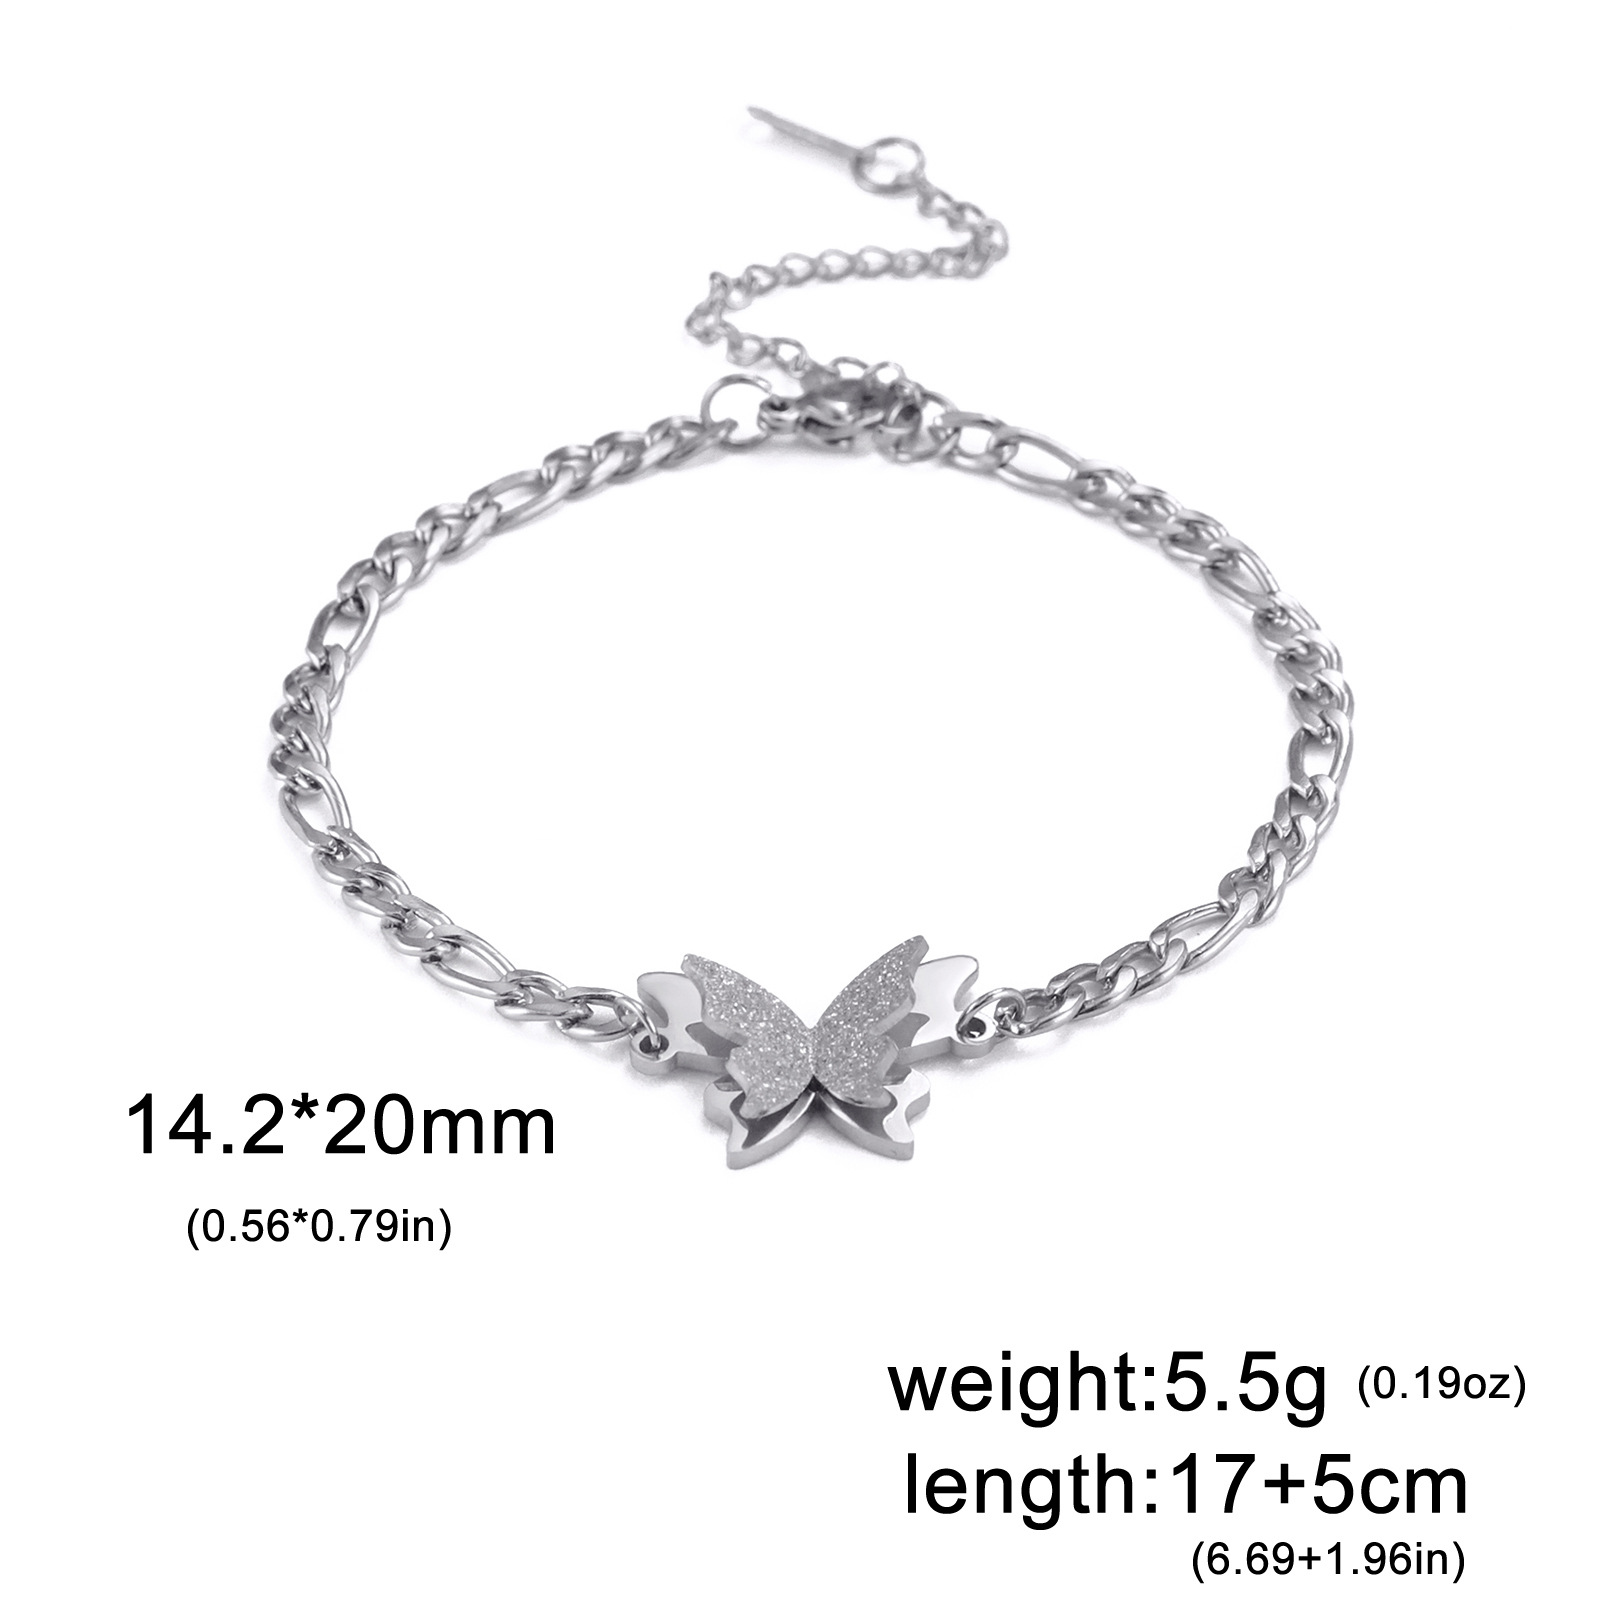 1:Steel color Figaro bracelet